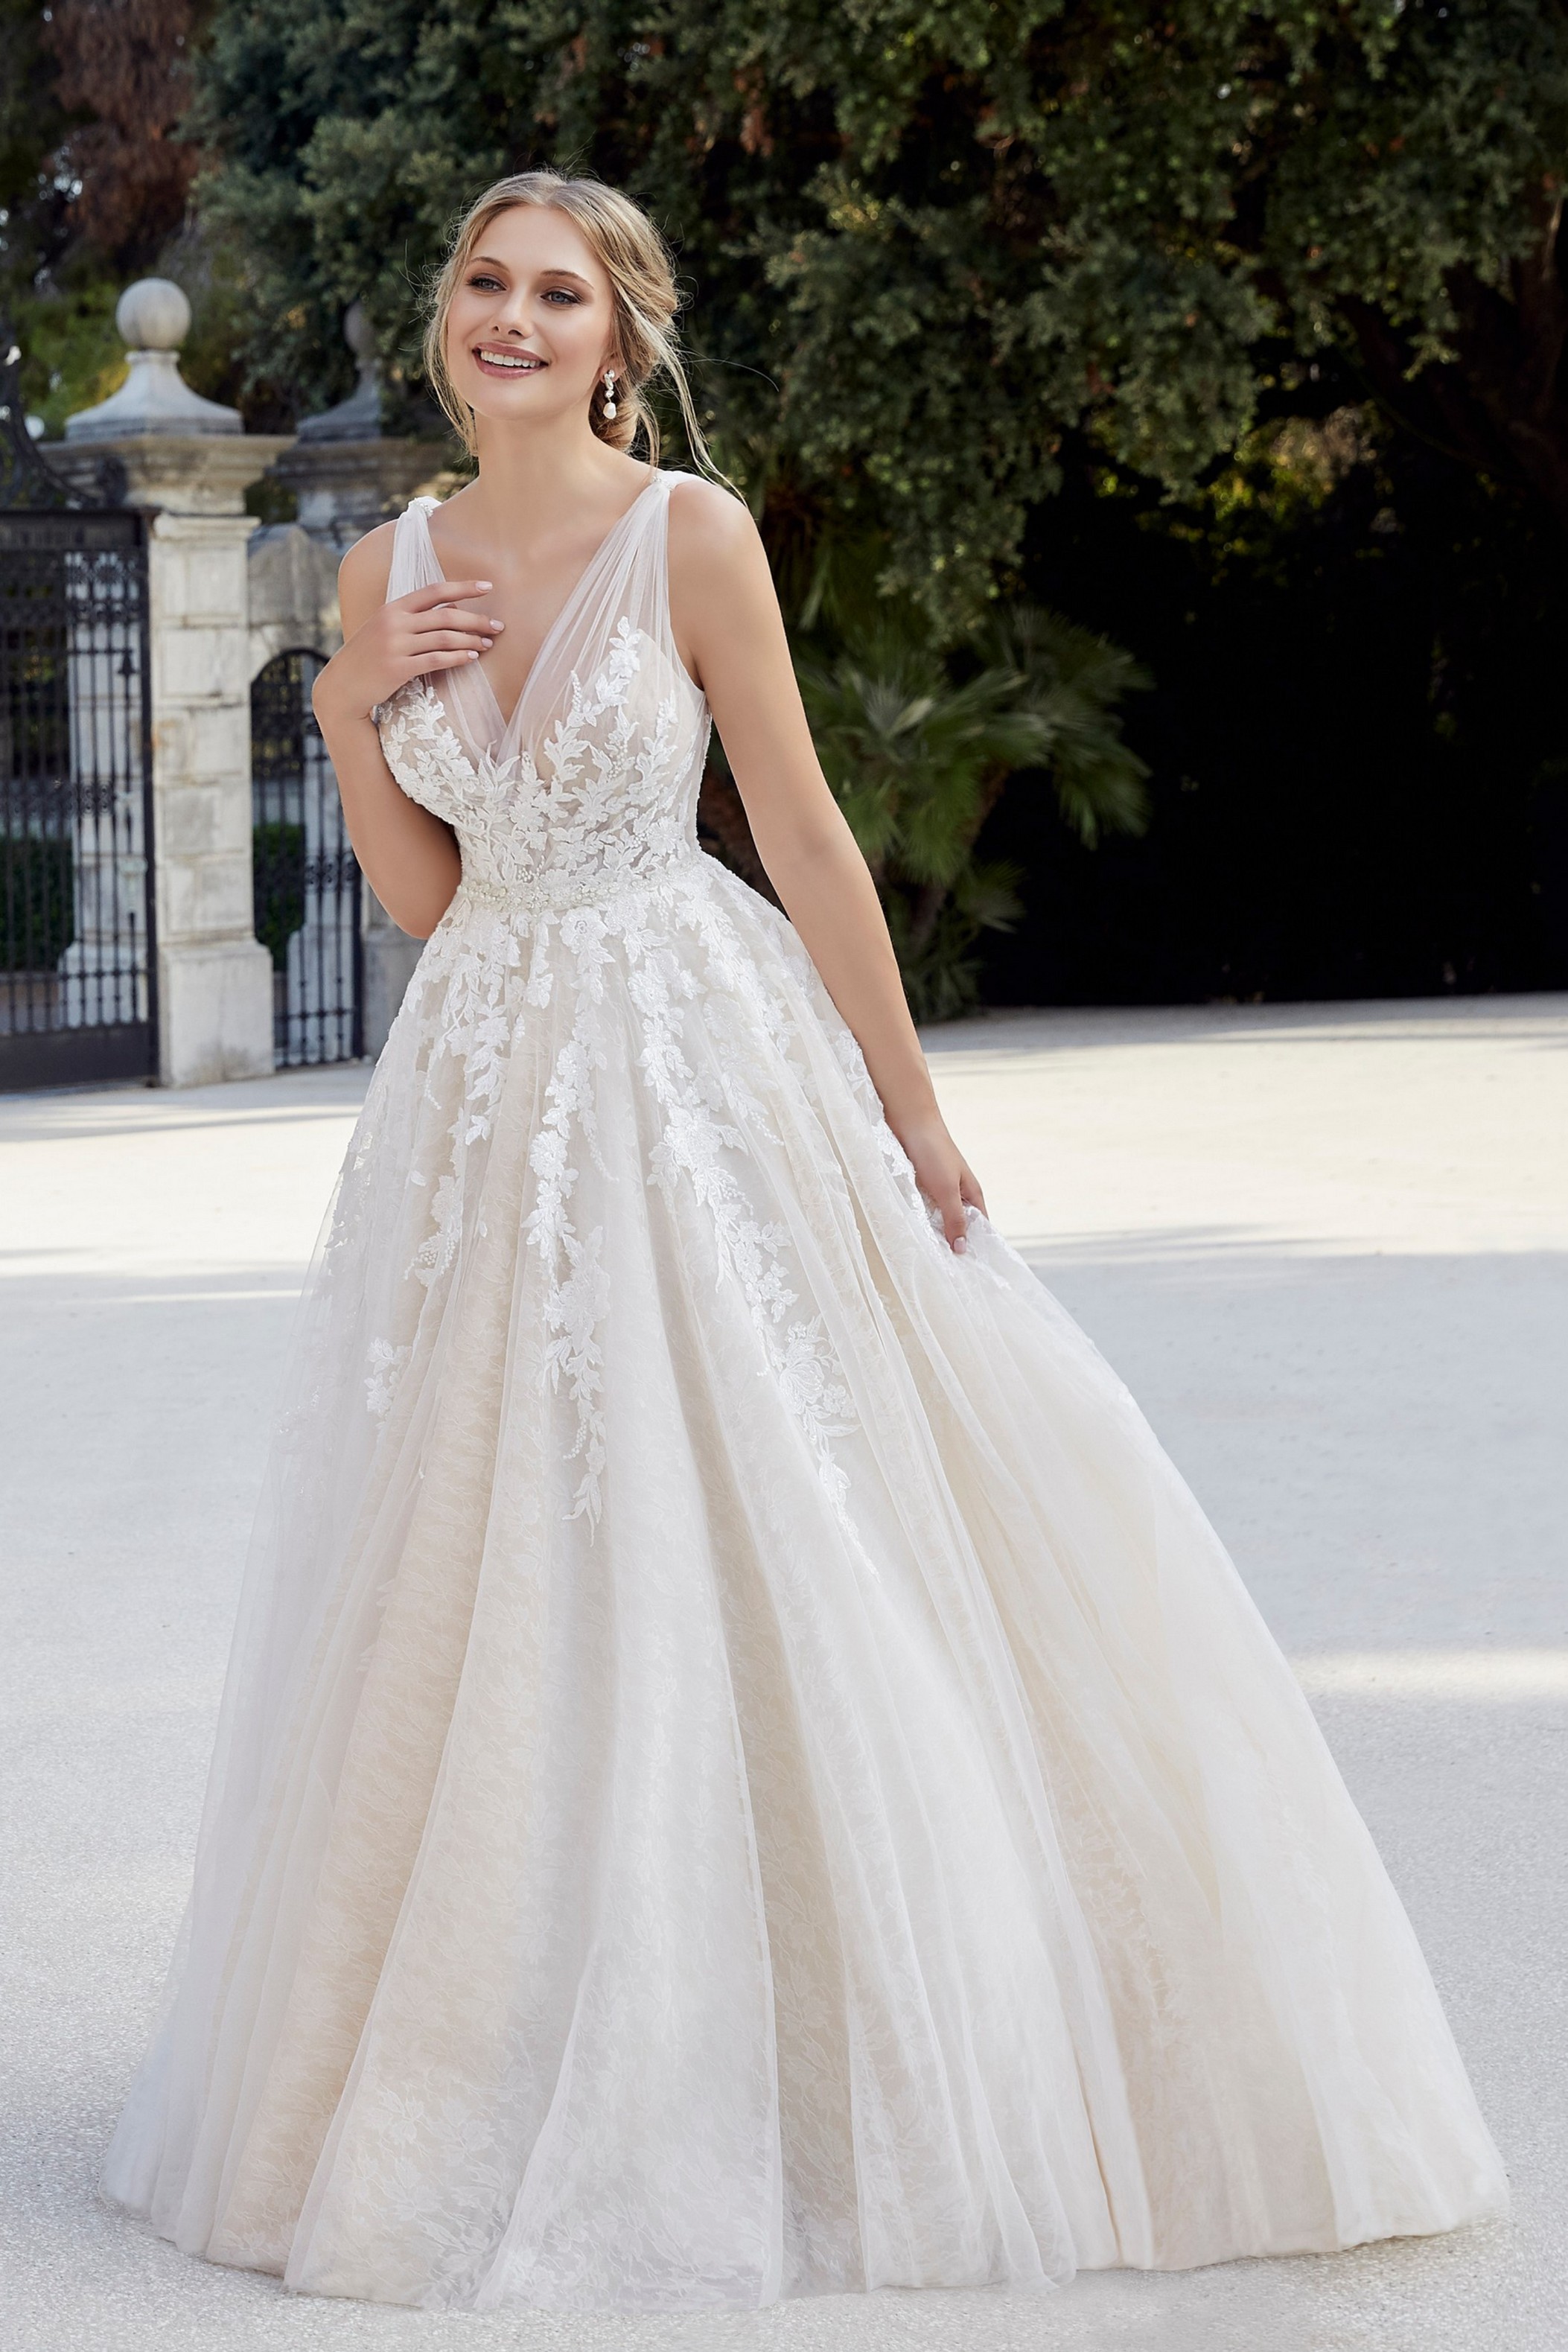 Ronald Joyces Victoria Jane 2016 Wedding Dress Collection 